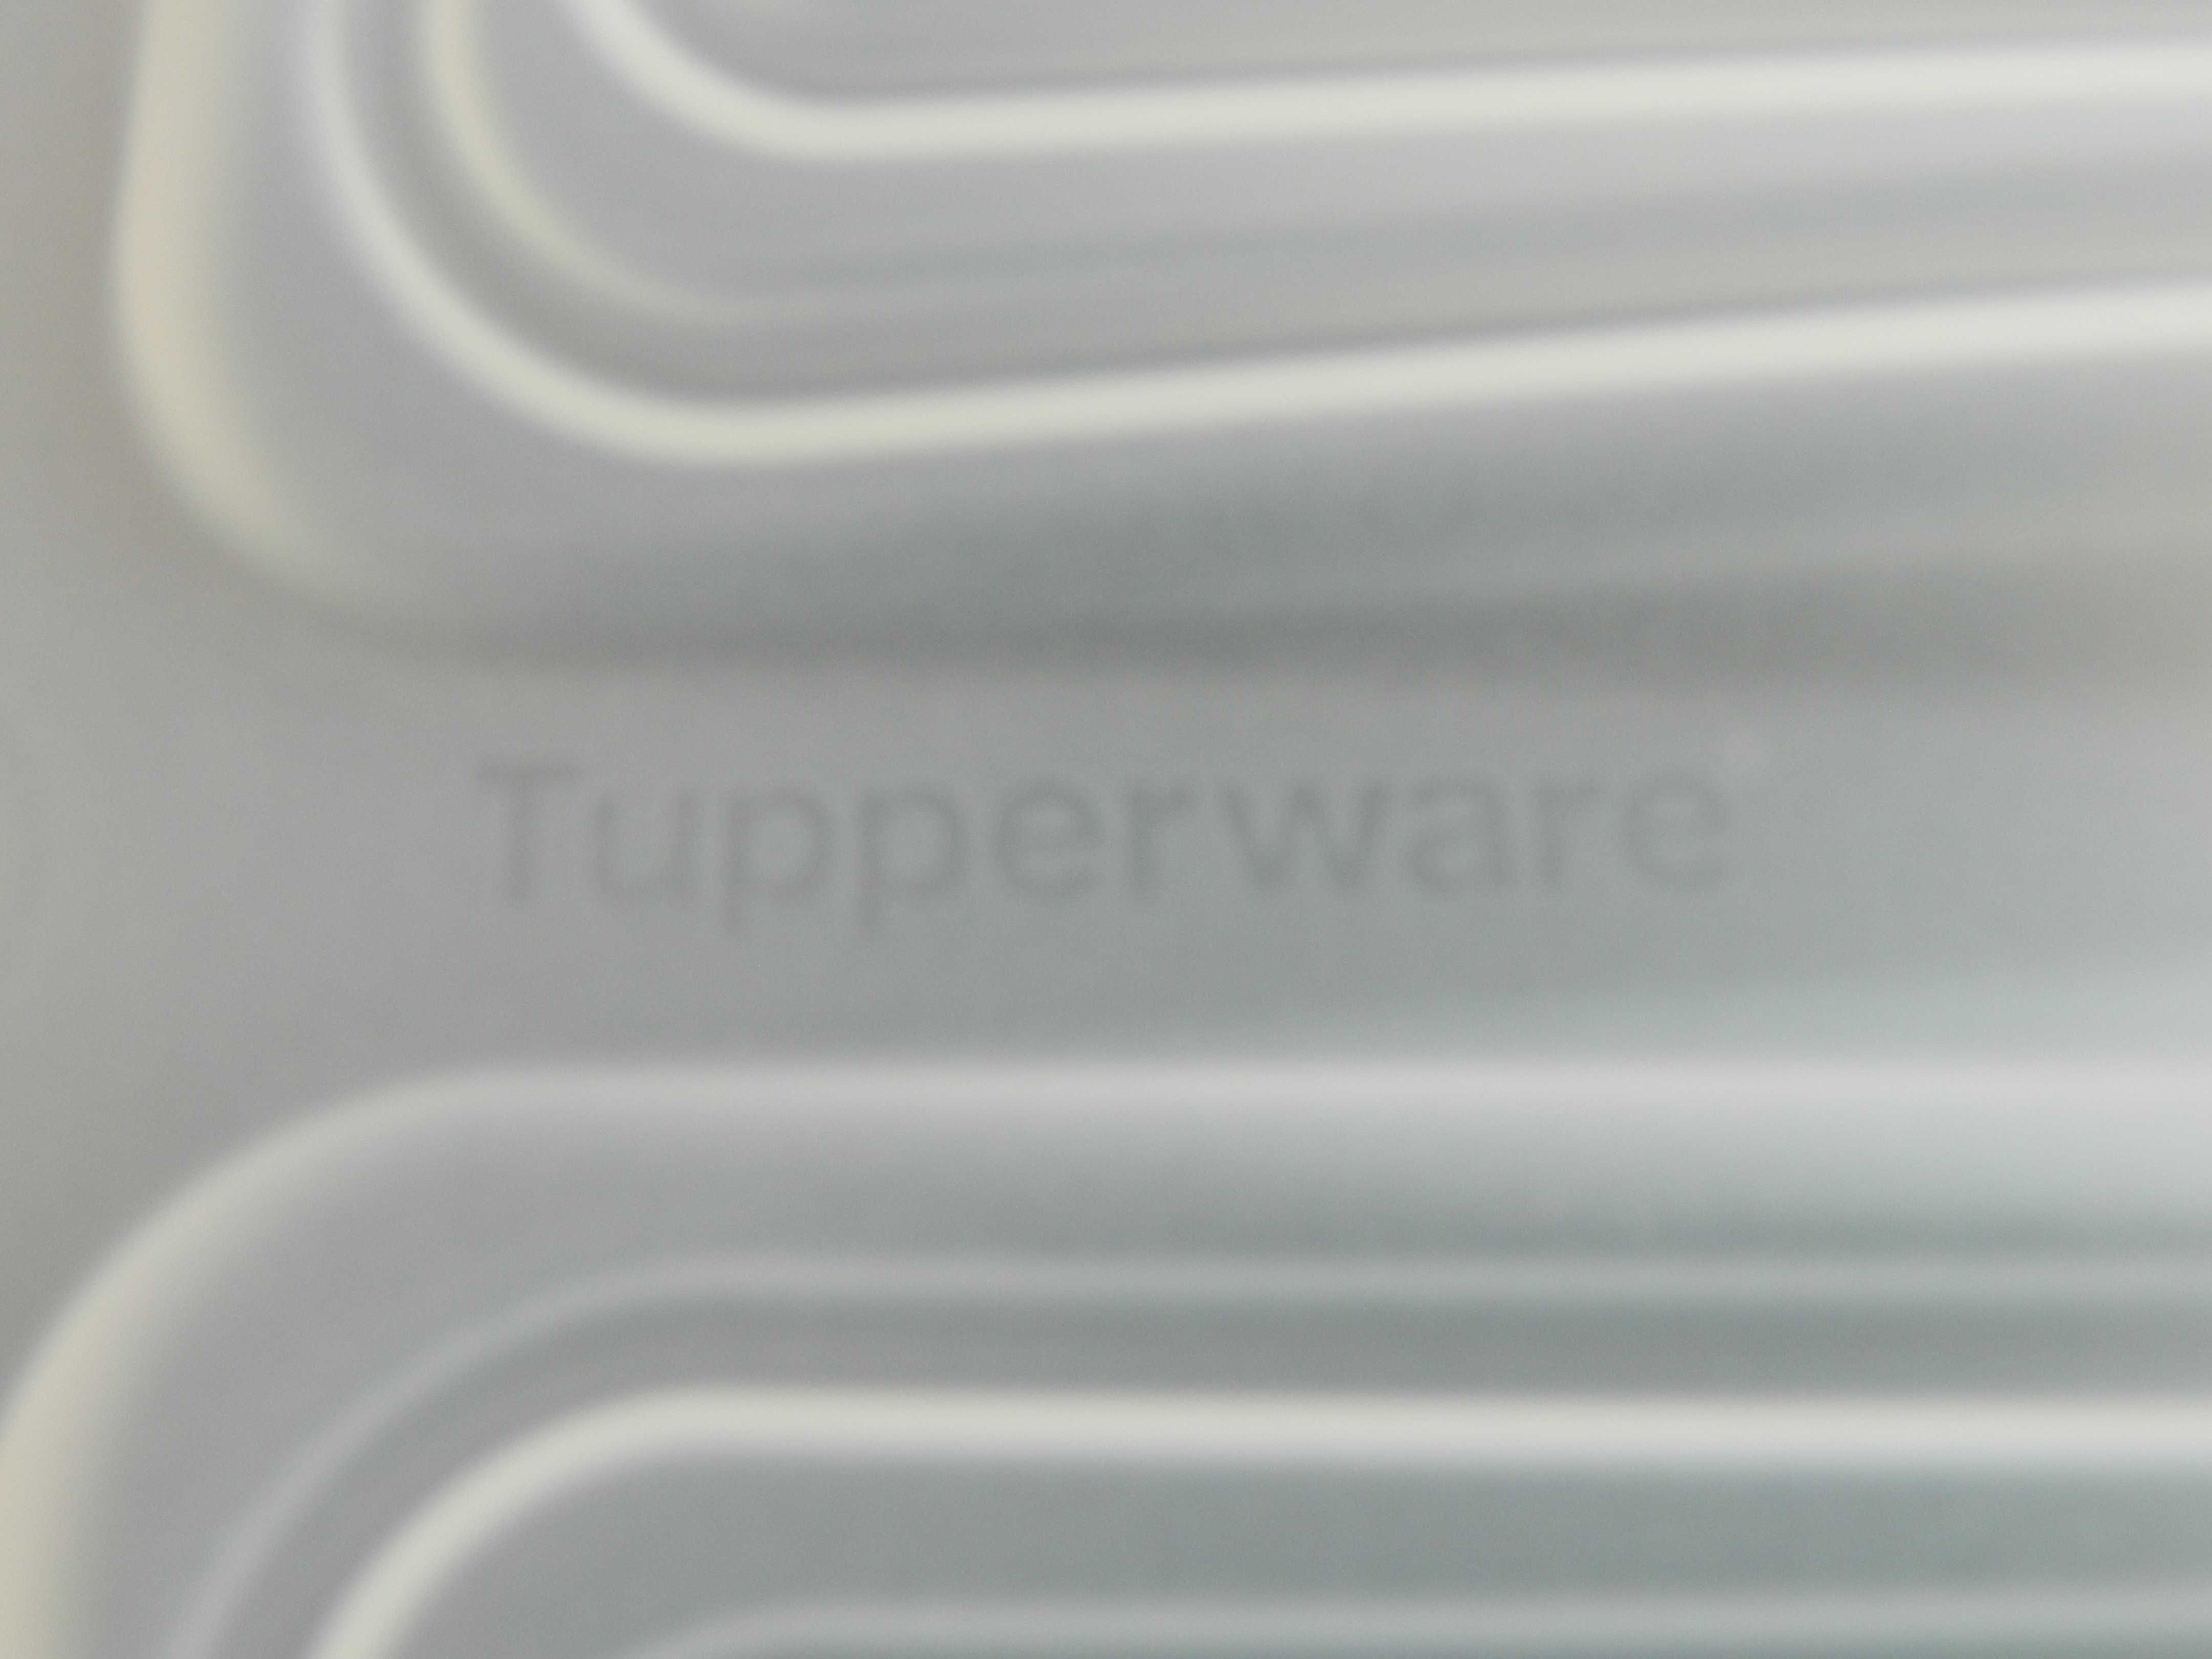 Tupperware Ventsmart duża szklarnia pojemnik 6,1 L - NOWY.